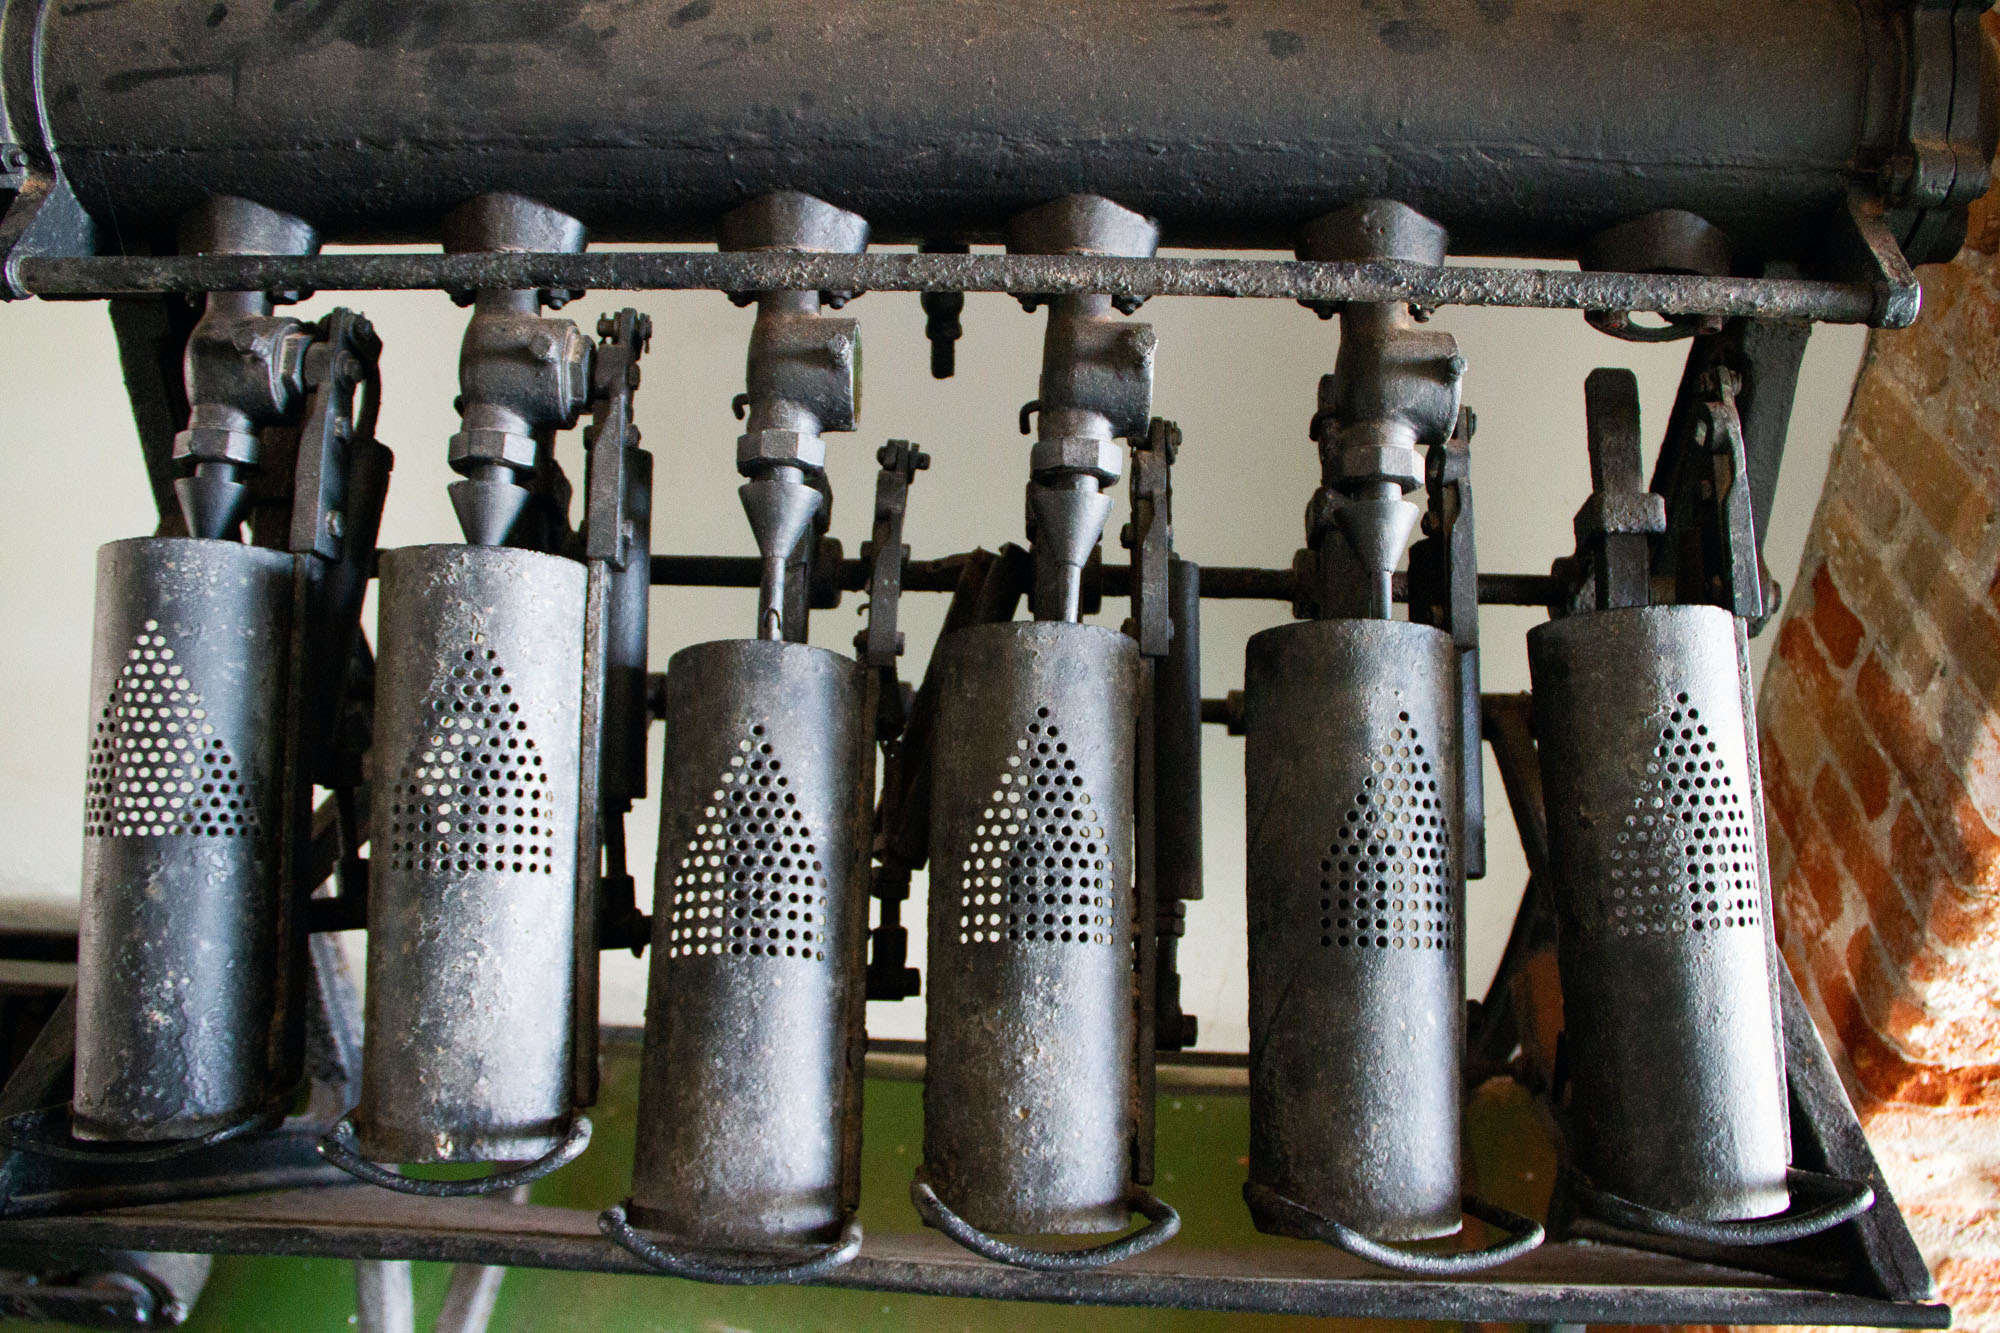 Sidra Asturias Bottle Maschine
